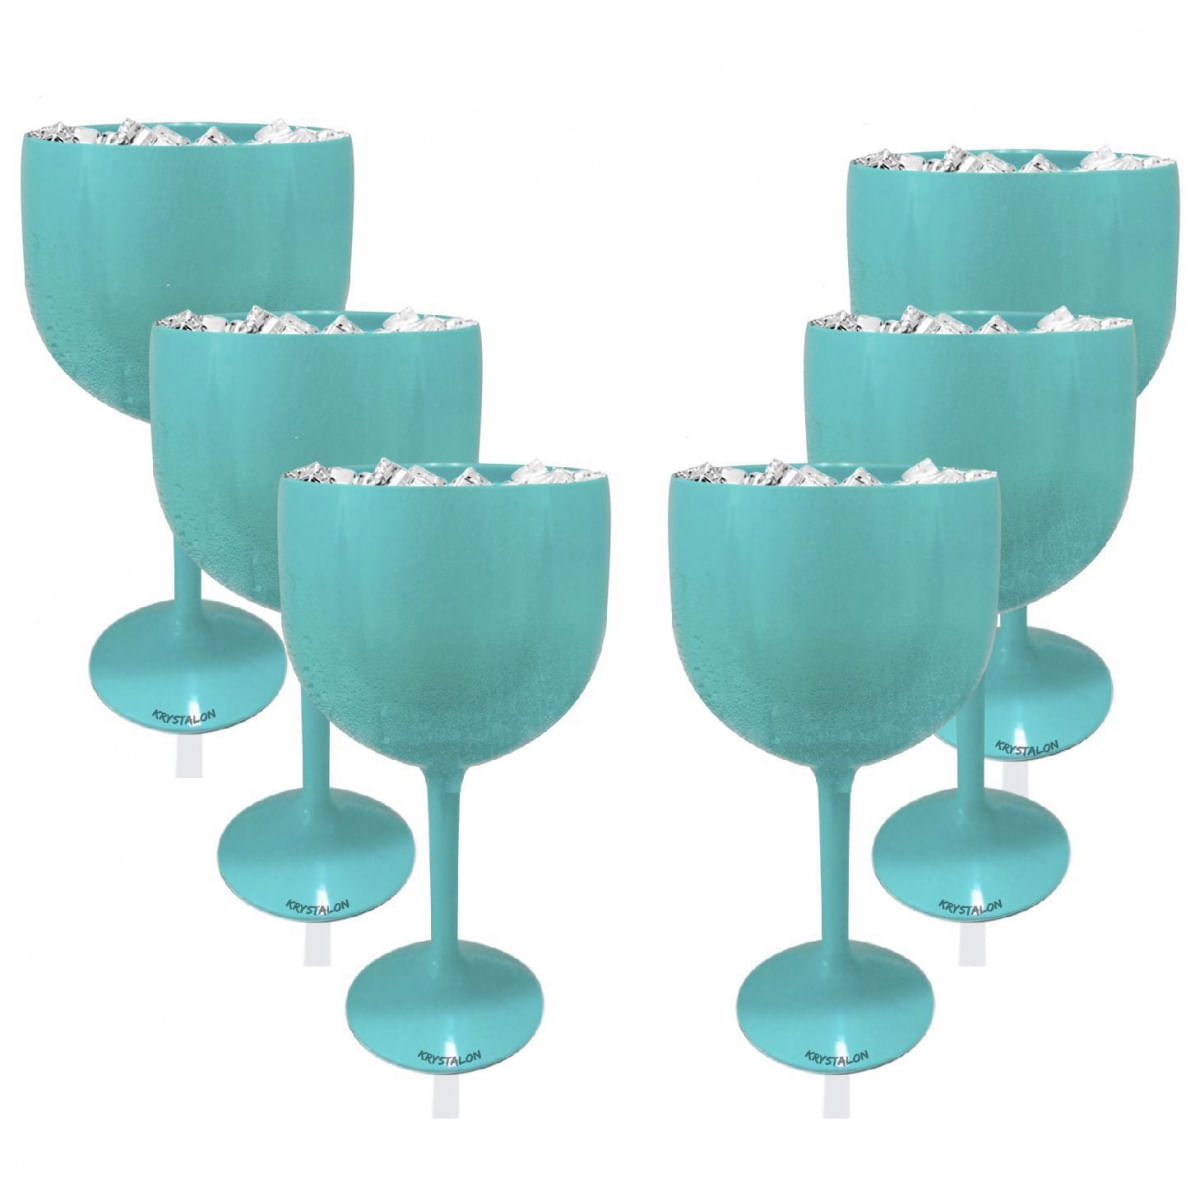 Kit 6 Taças Gin Azul Tiffany Acrílico Copo Gin